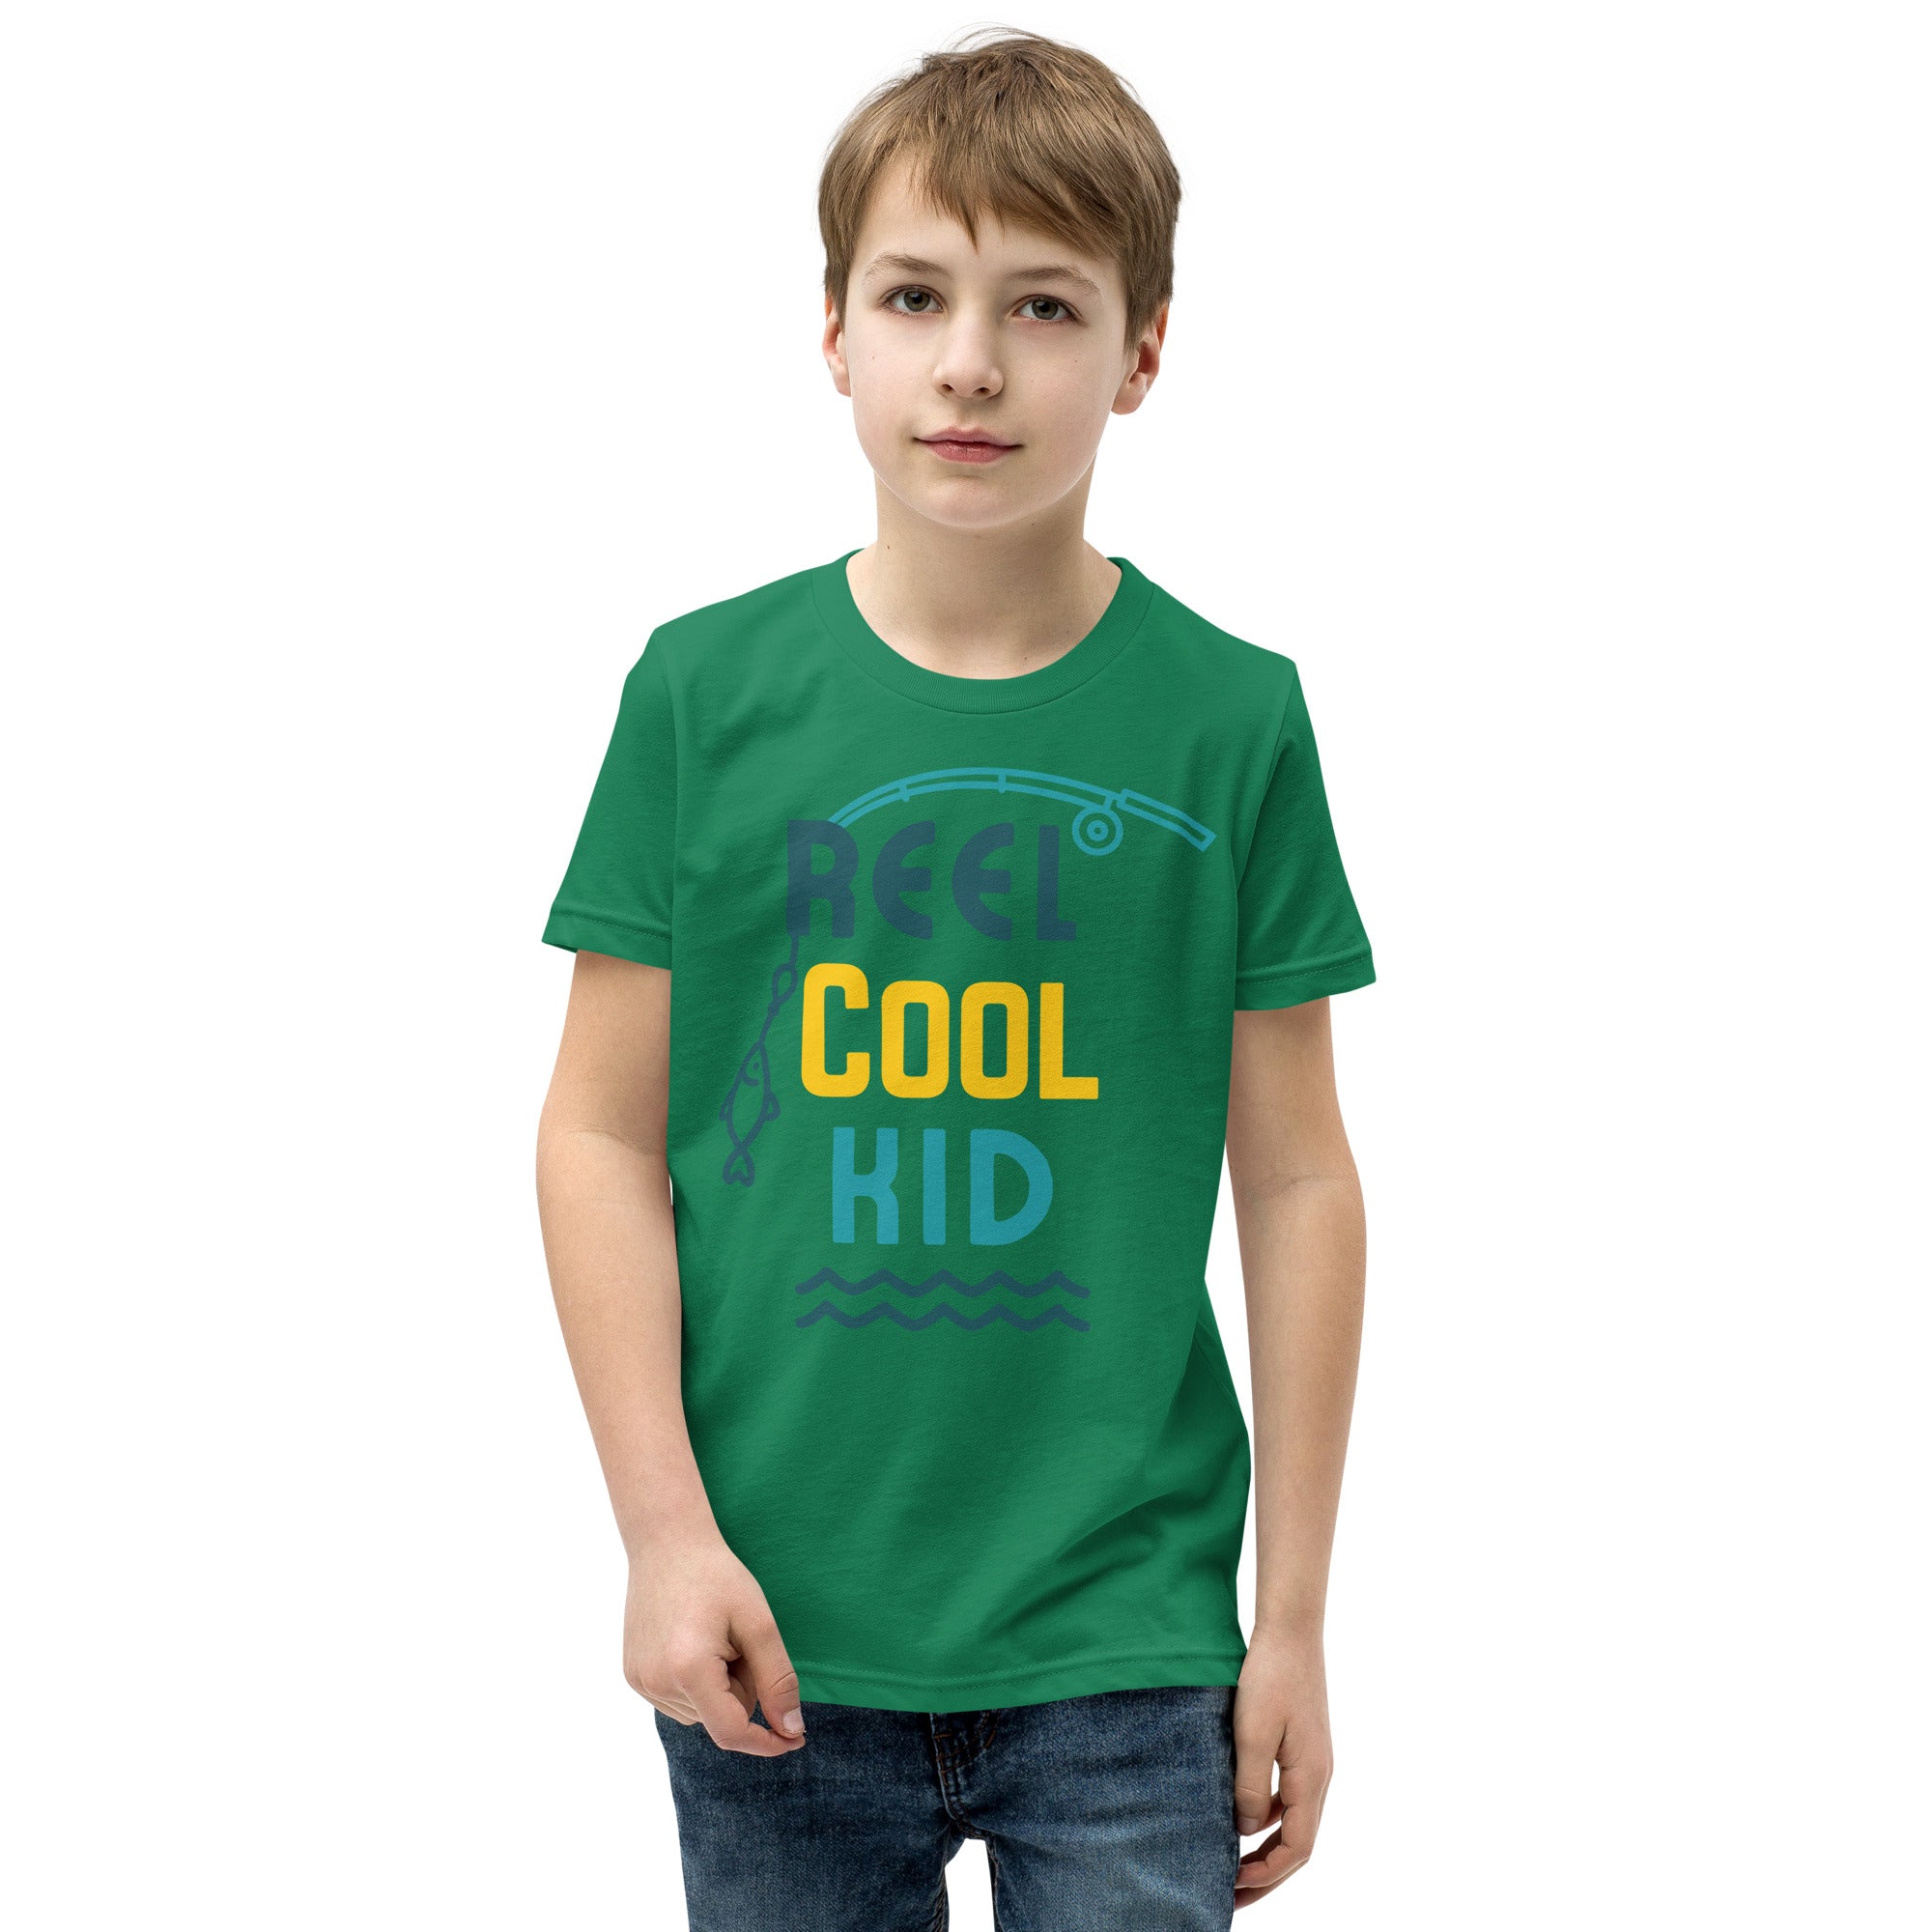 Reel Cool Kid - Youth Short Sleeve T-Shirt